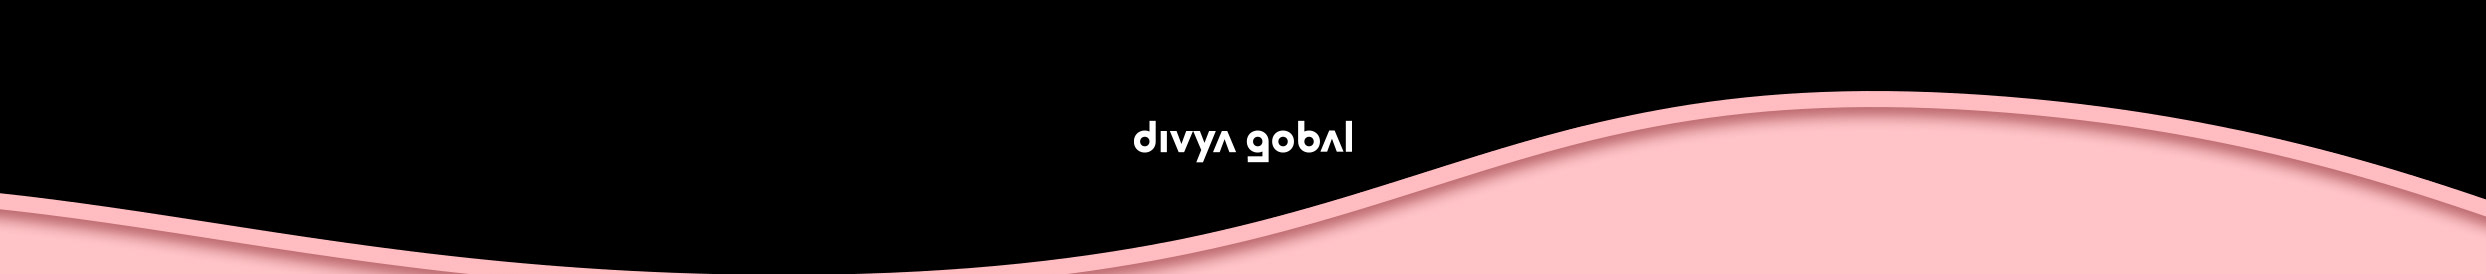 Divya Gobal's profile banner